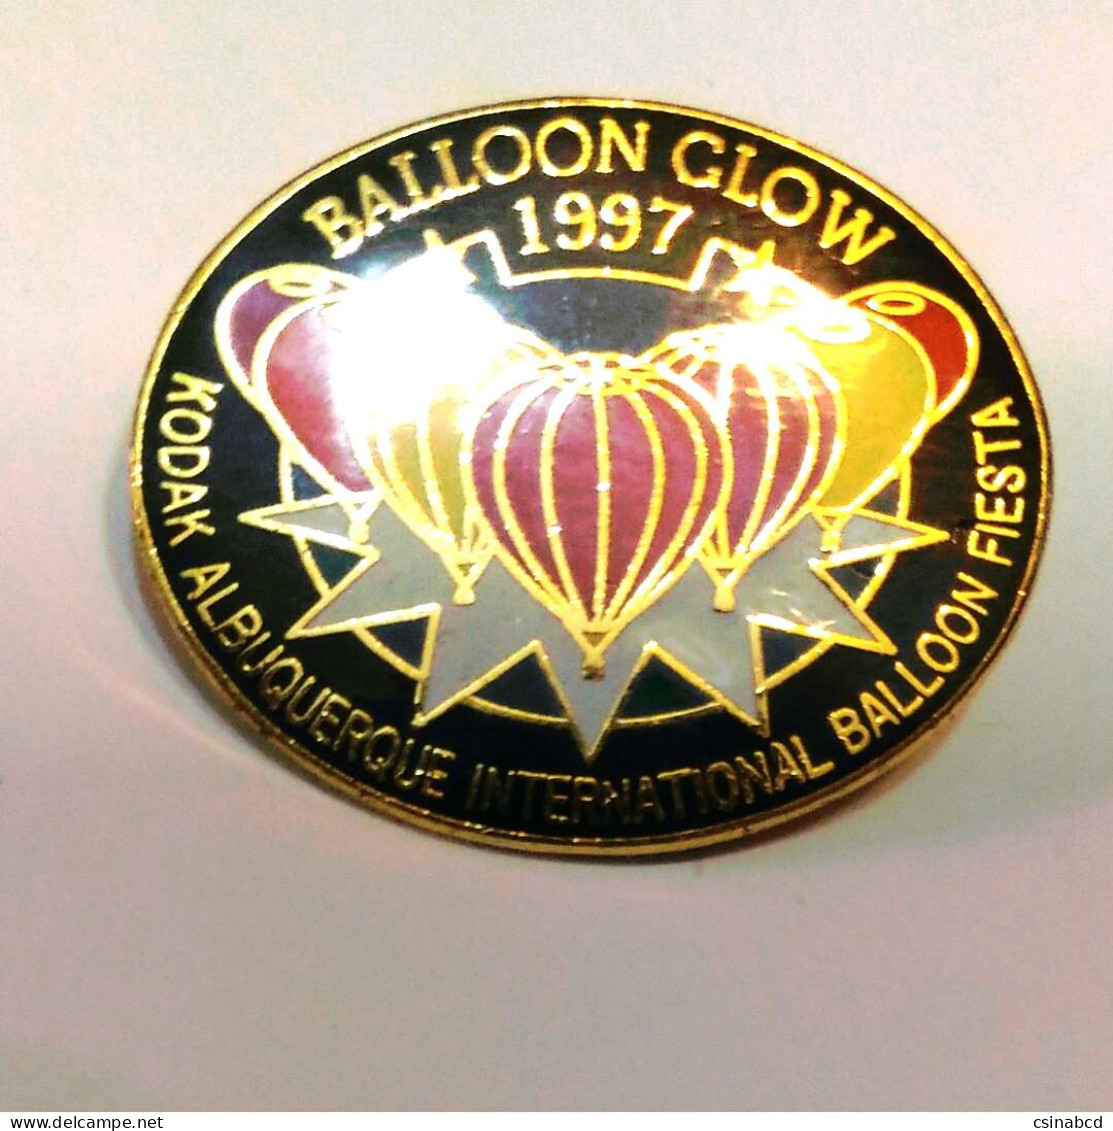 1997 Kodak Albuquerque BALLOON GLOW International Balloon Fiesta AIBF Hot Air Ballon Pin Badge - Transports